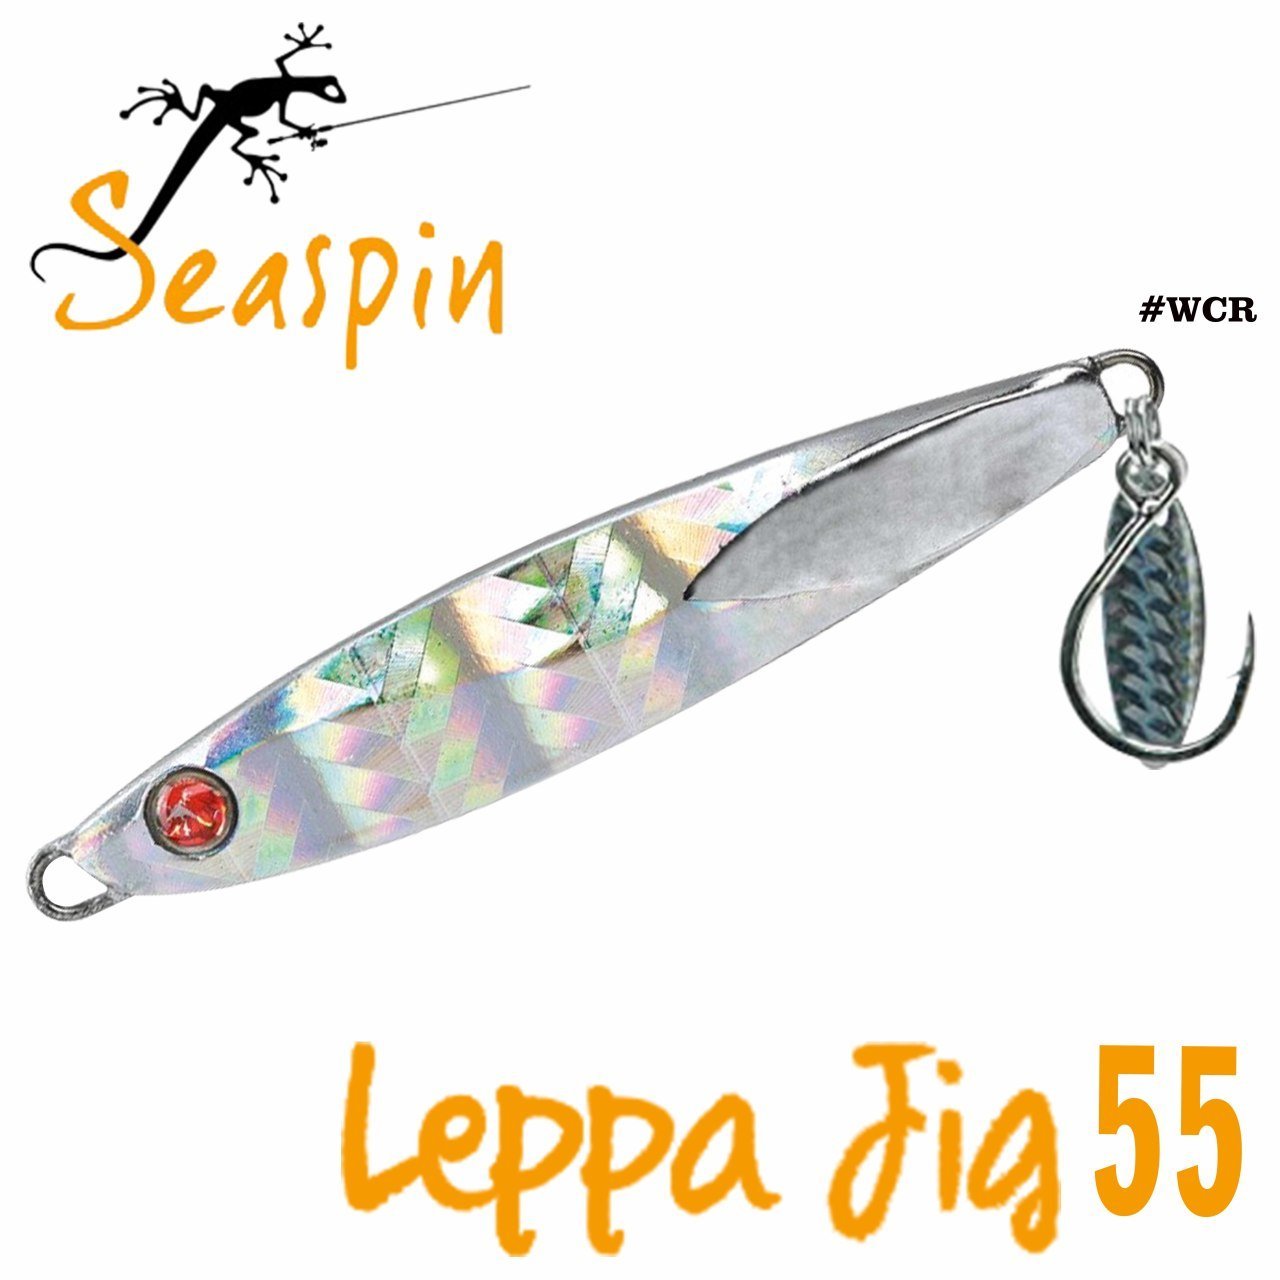 Seaspin Leppa 55gr jig yem #WCR